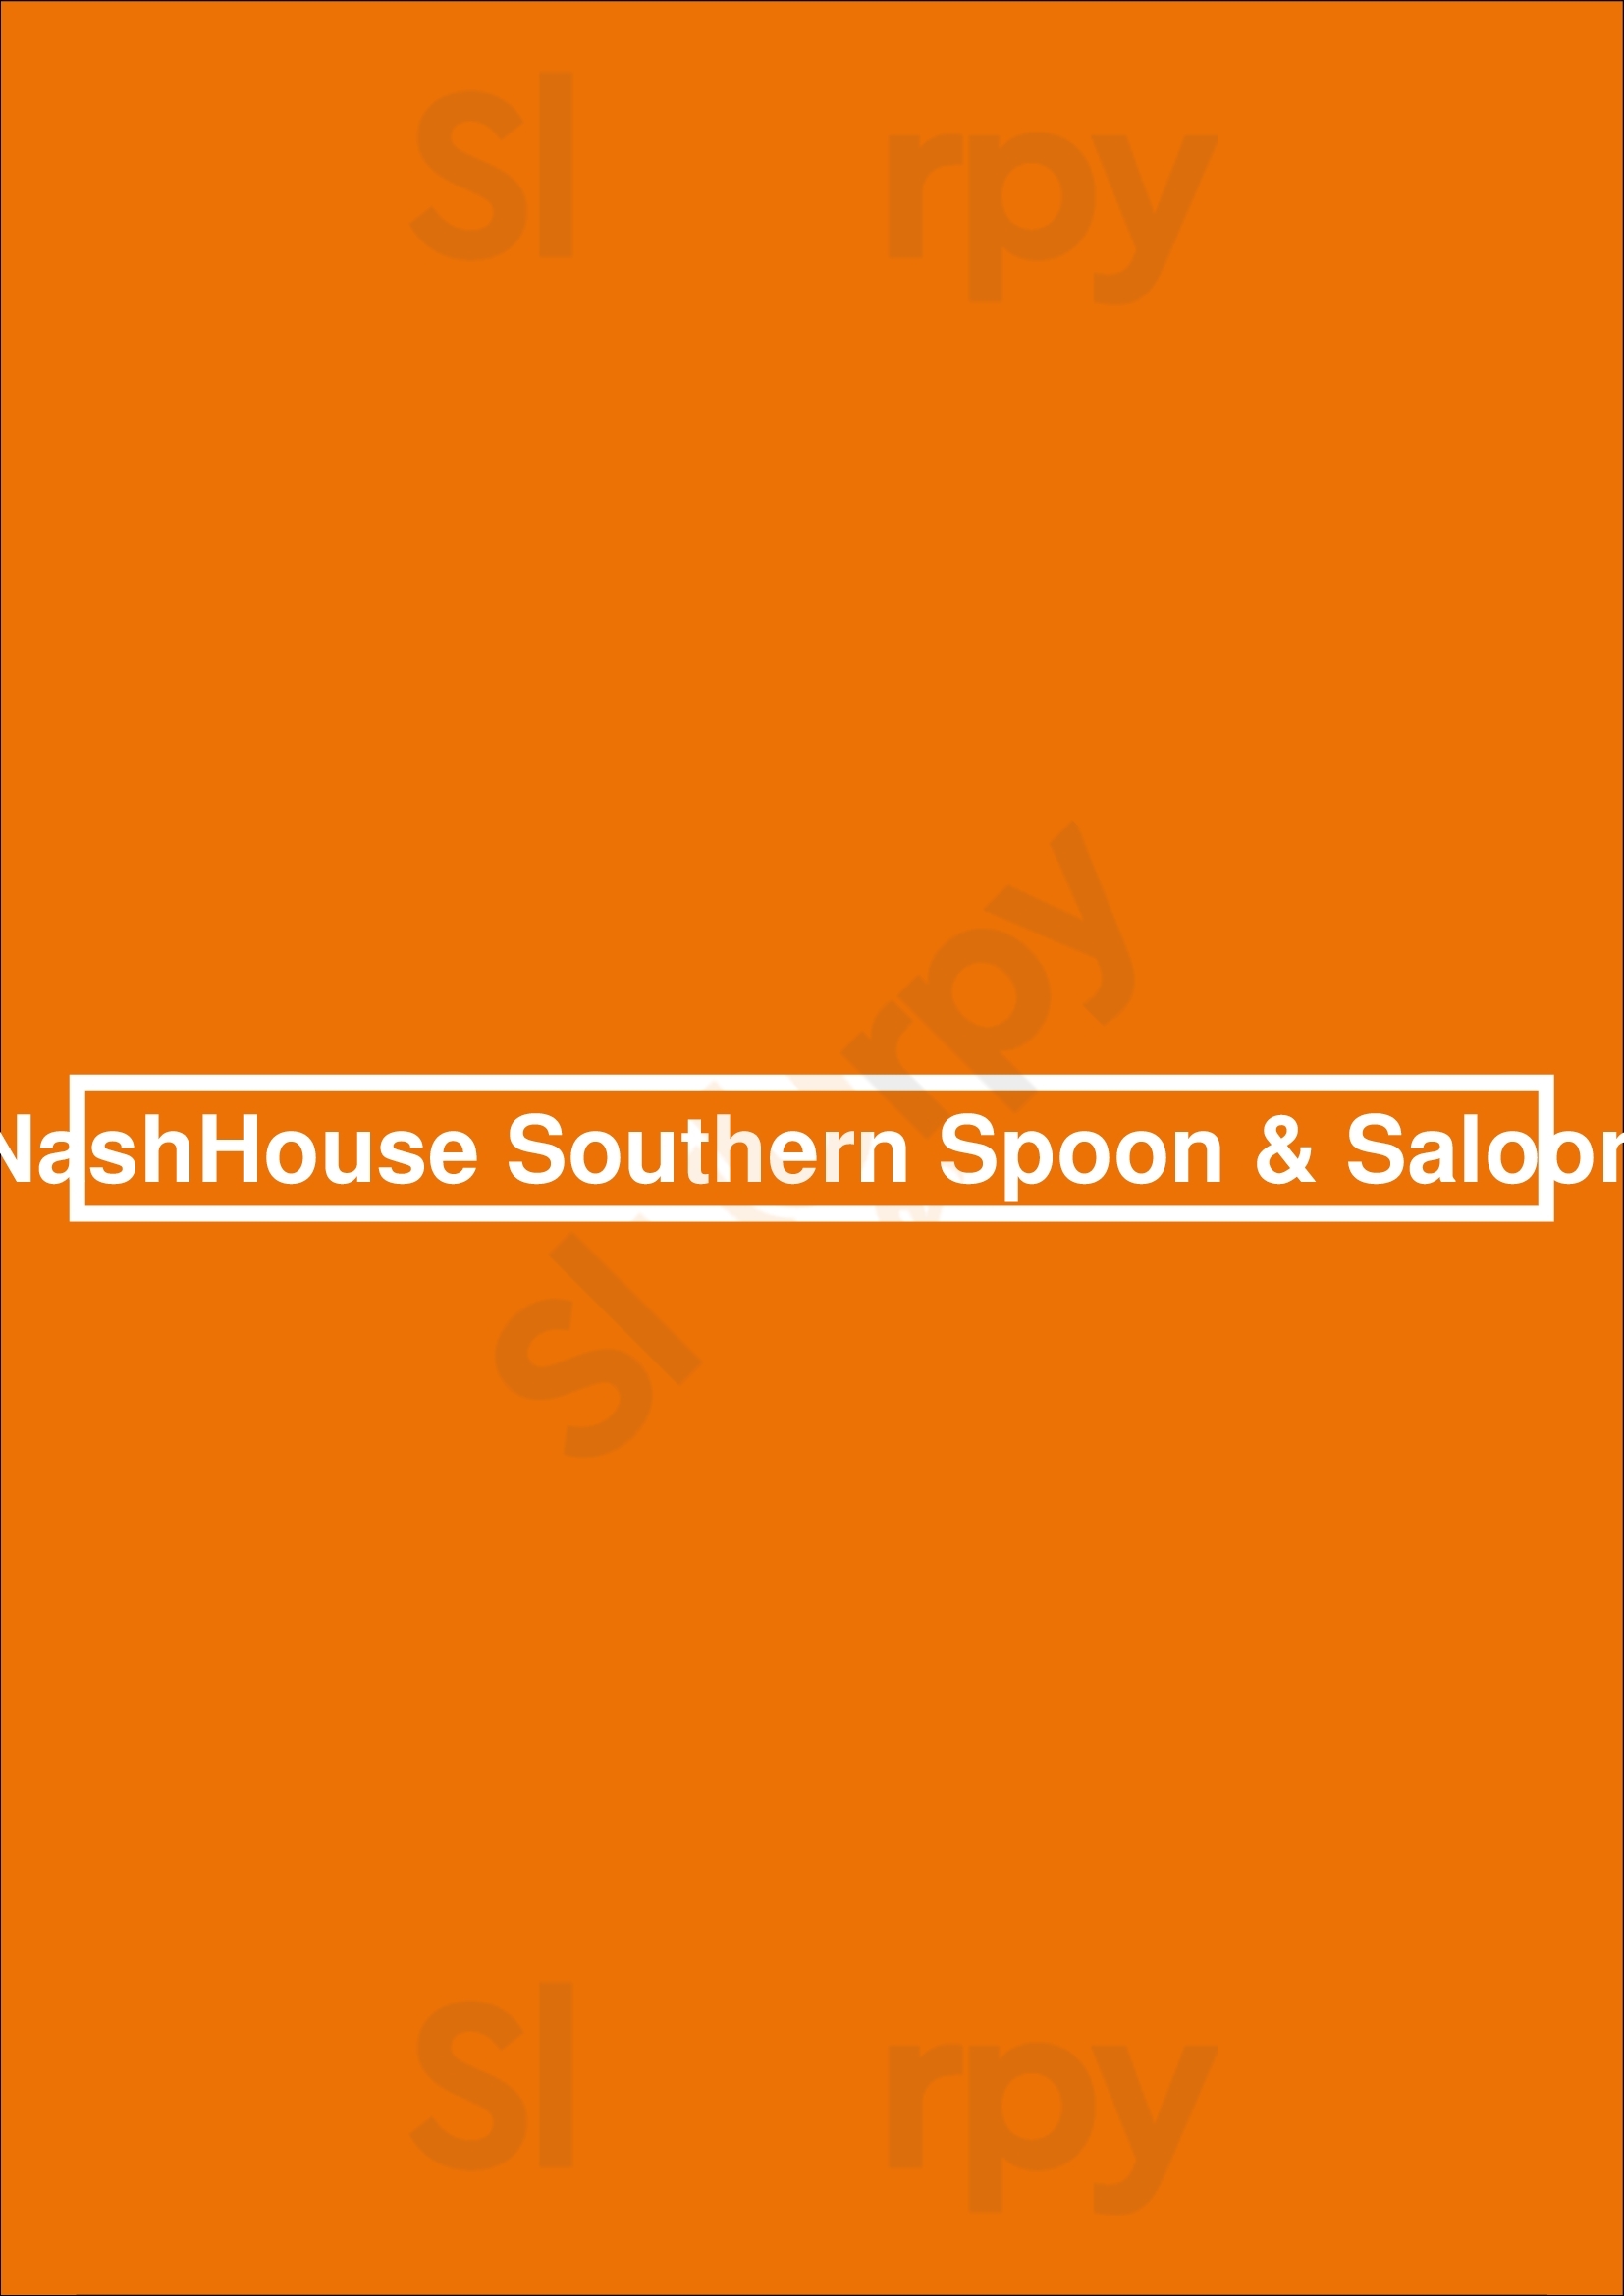 Nashhouse Southern Spoon & Saloon Nashville Menu - 1